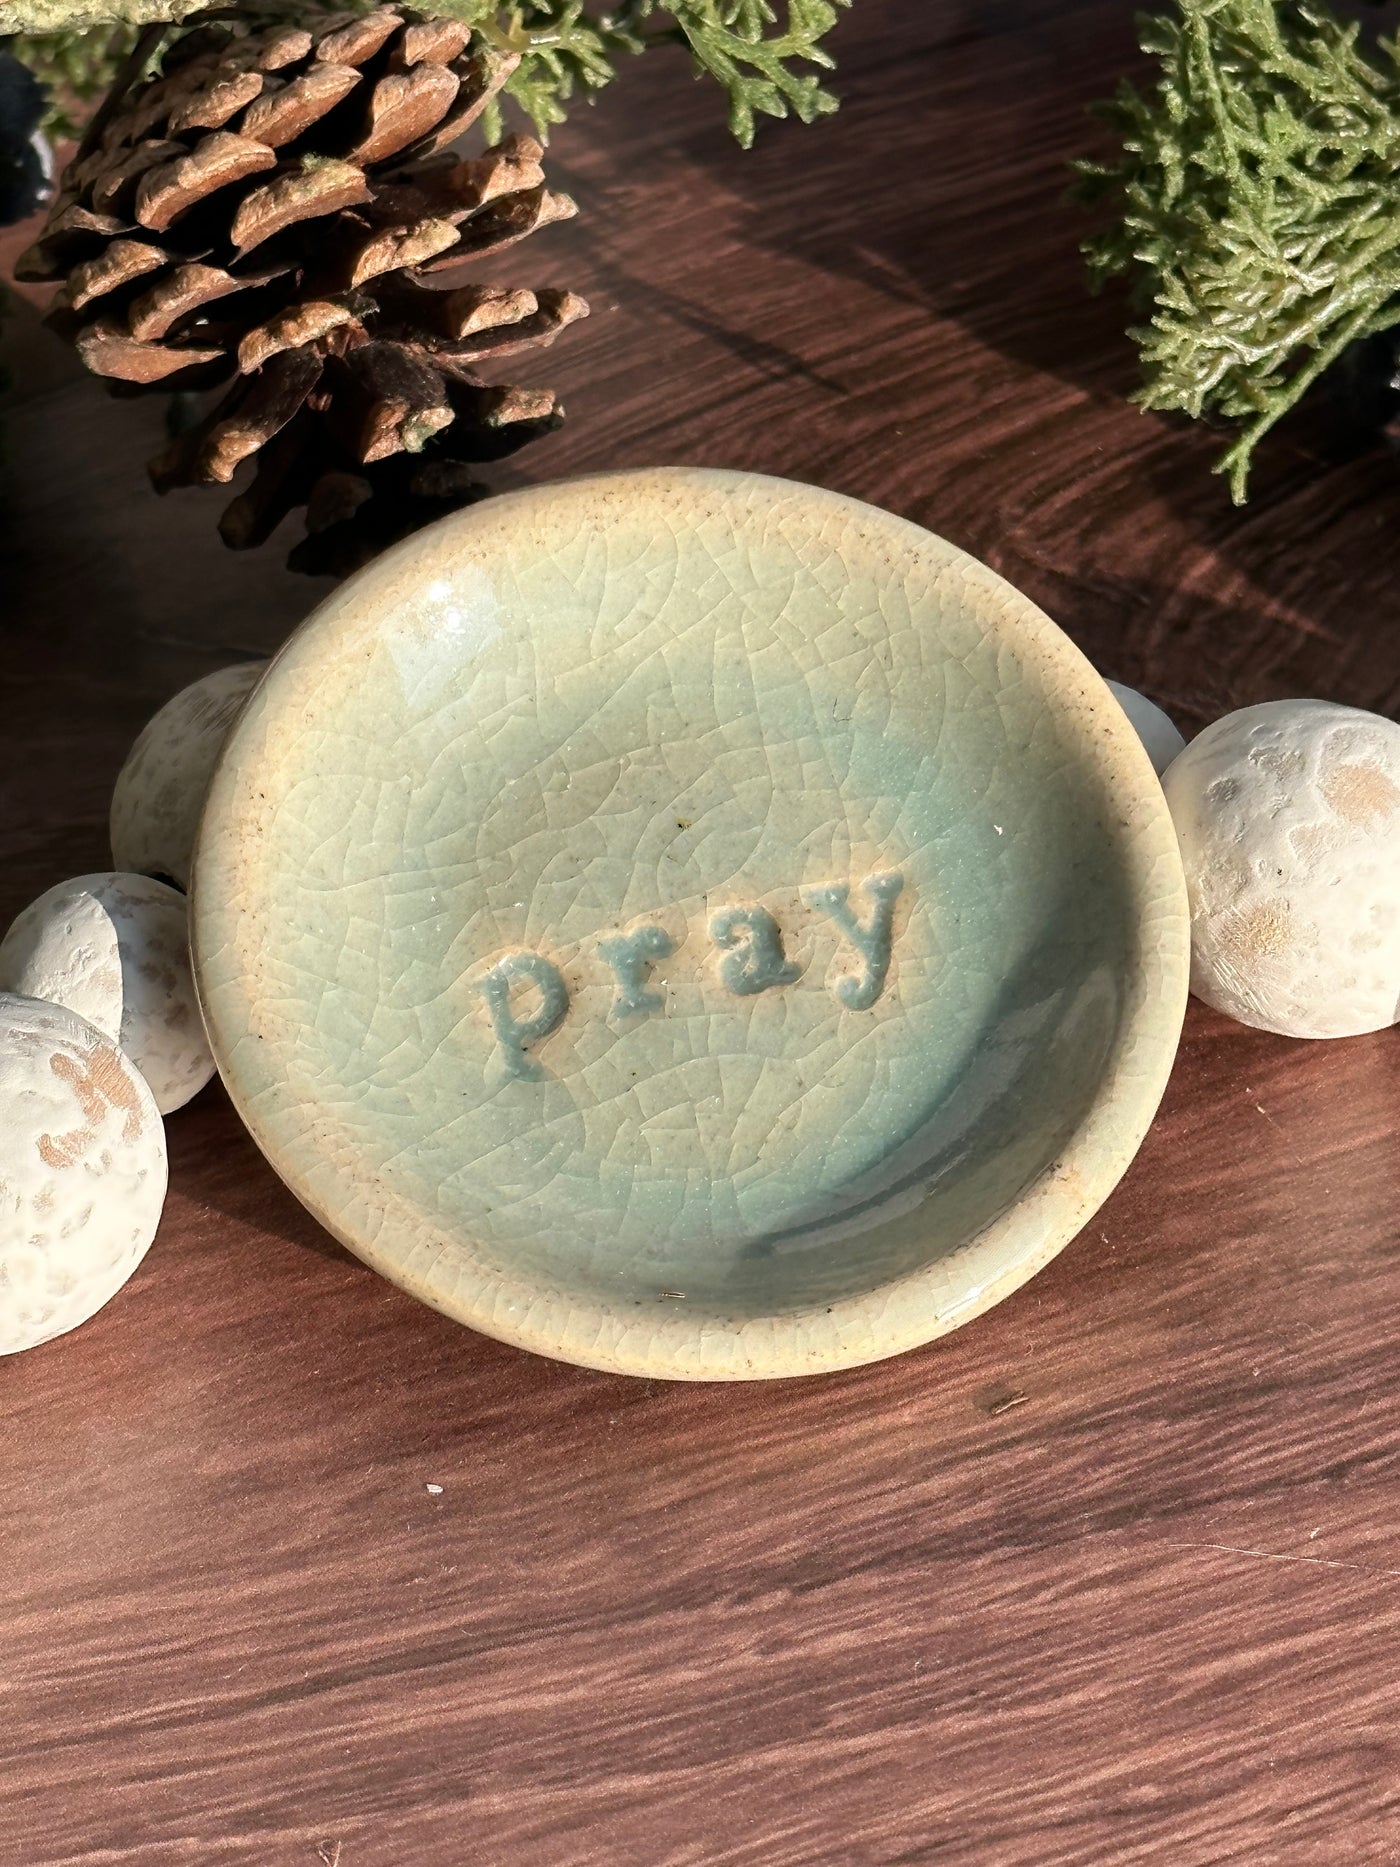 icy blue ceramic pray wish dish